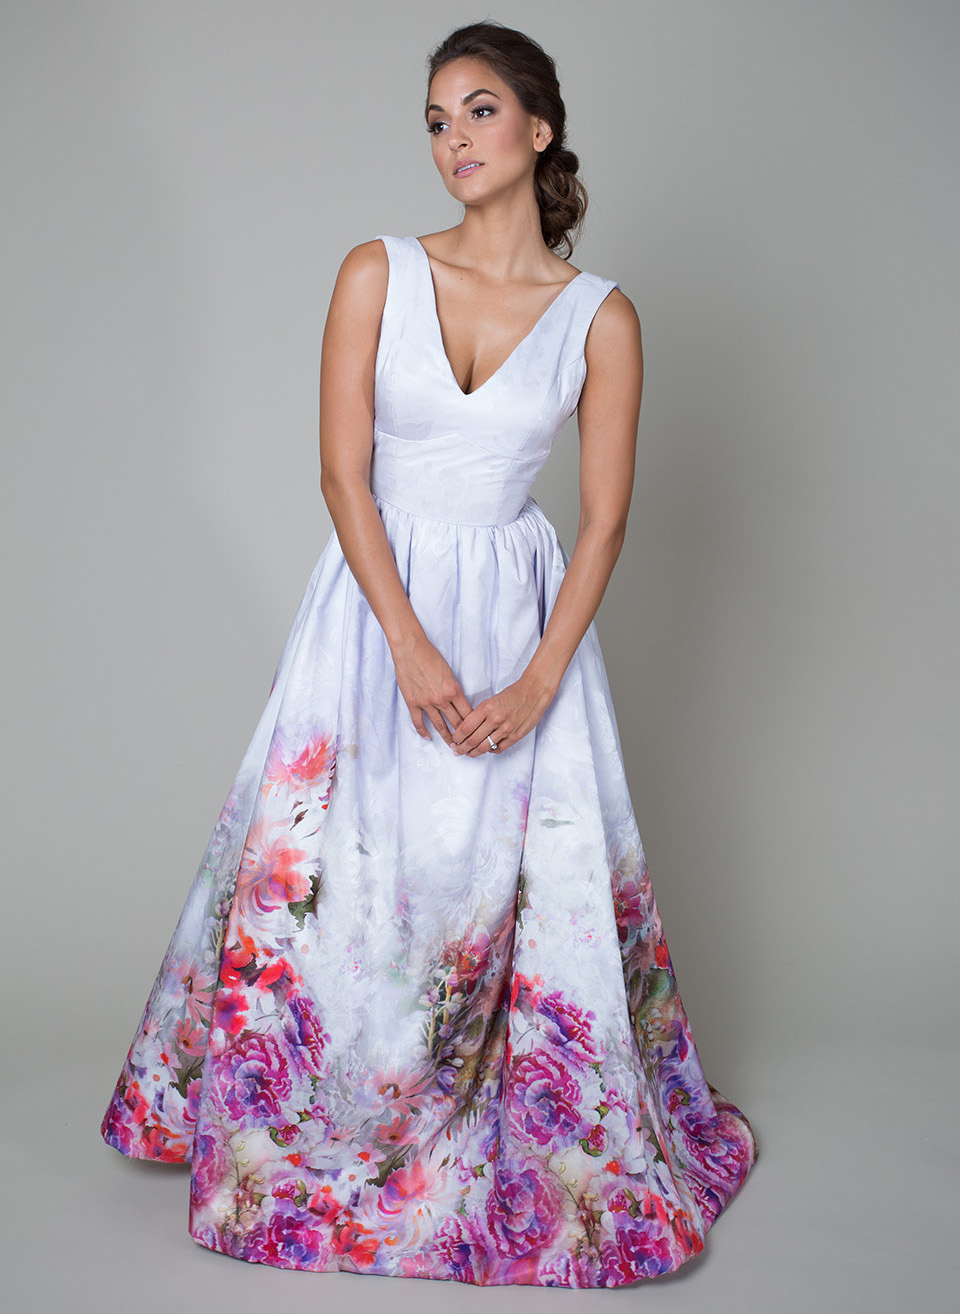 20 Floral Wedding Dresses That Will Take Your Breath Away - Heidi Elnora Valerie Lynn